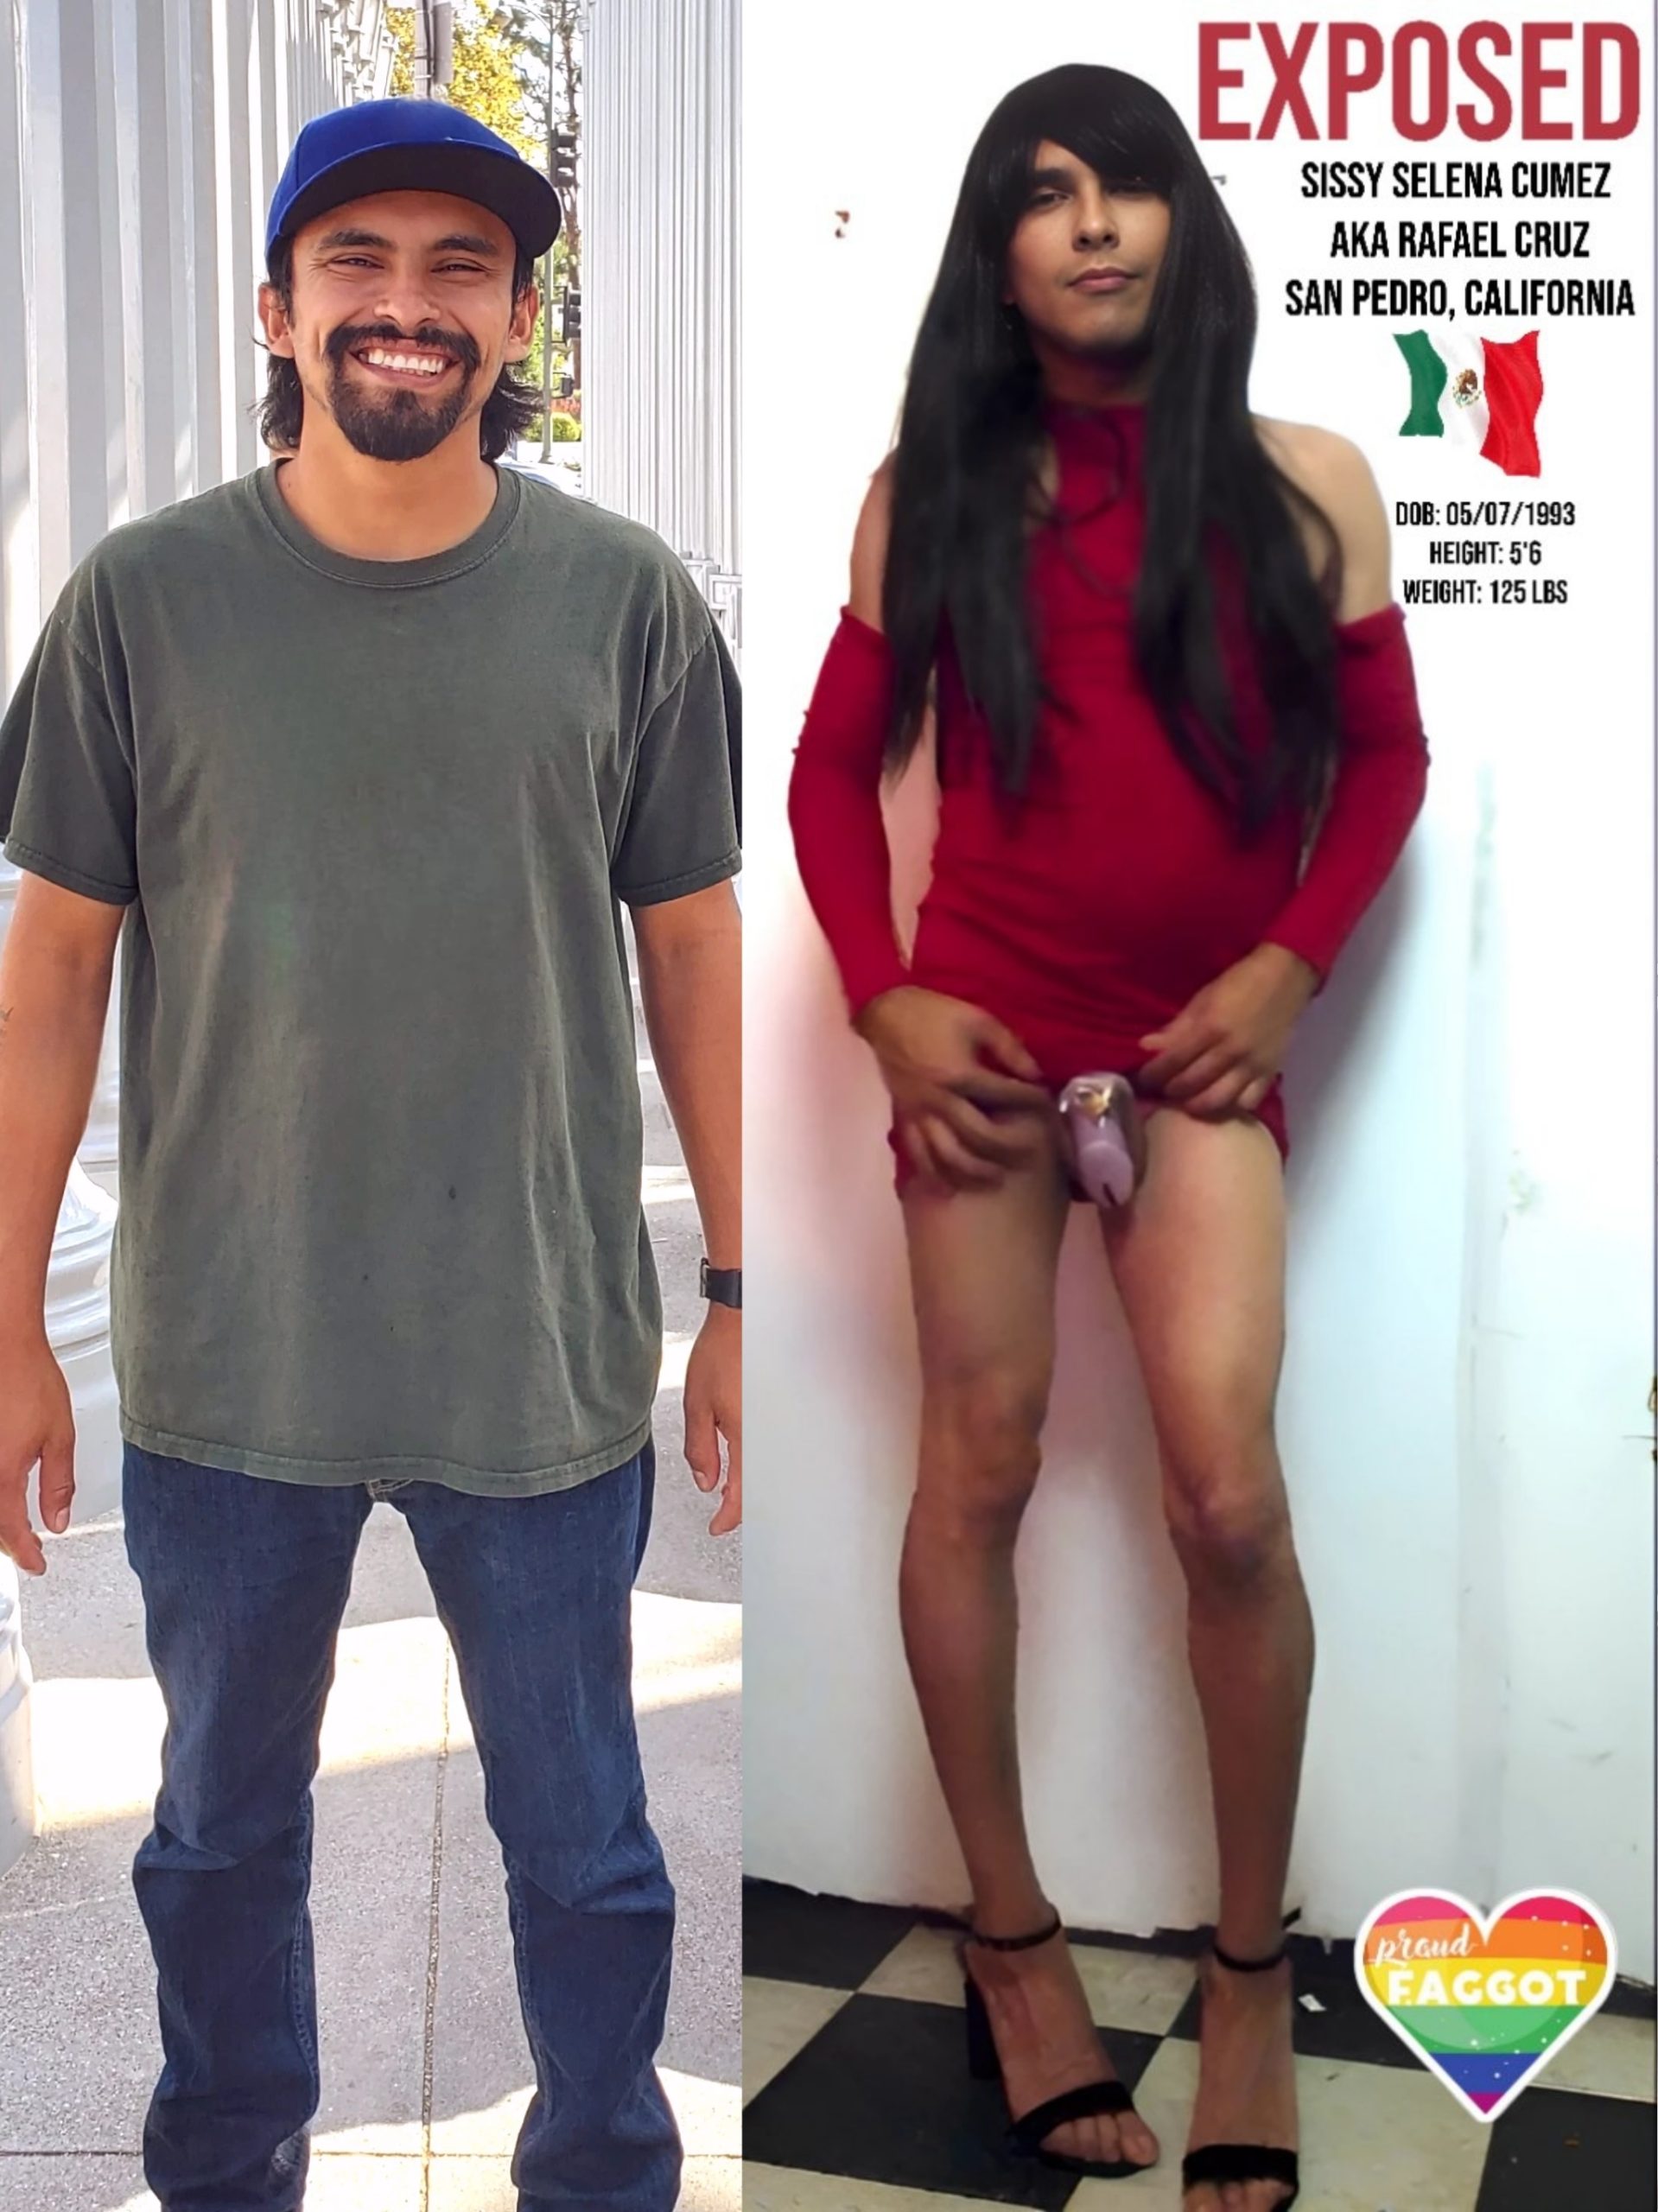 Mexican Sissy Bitch Selena Cumez AKA Rafael Cruz Exposed